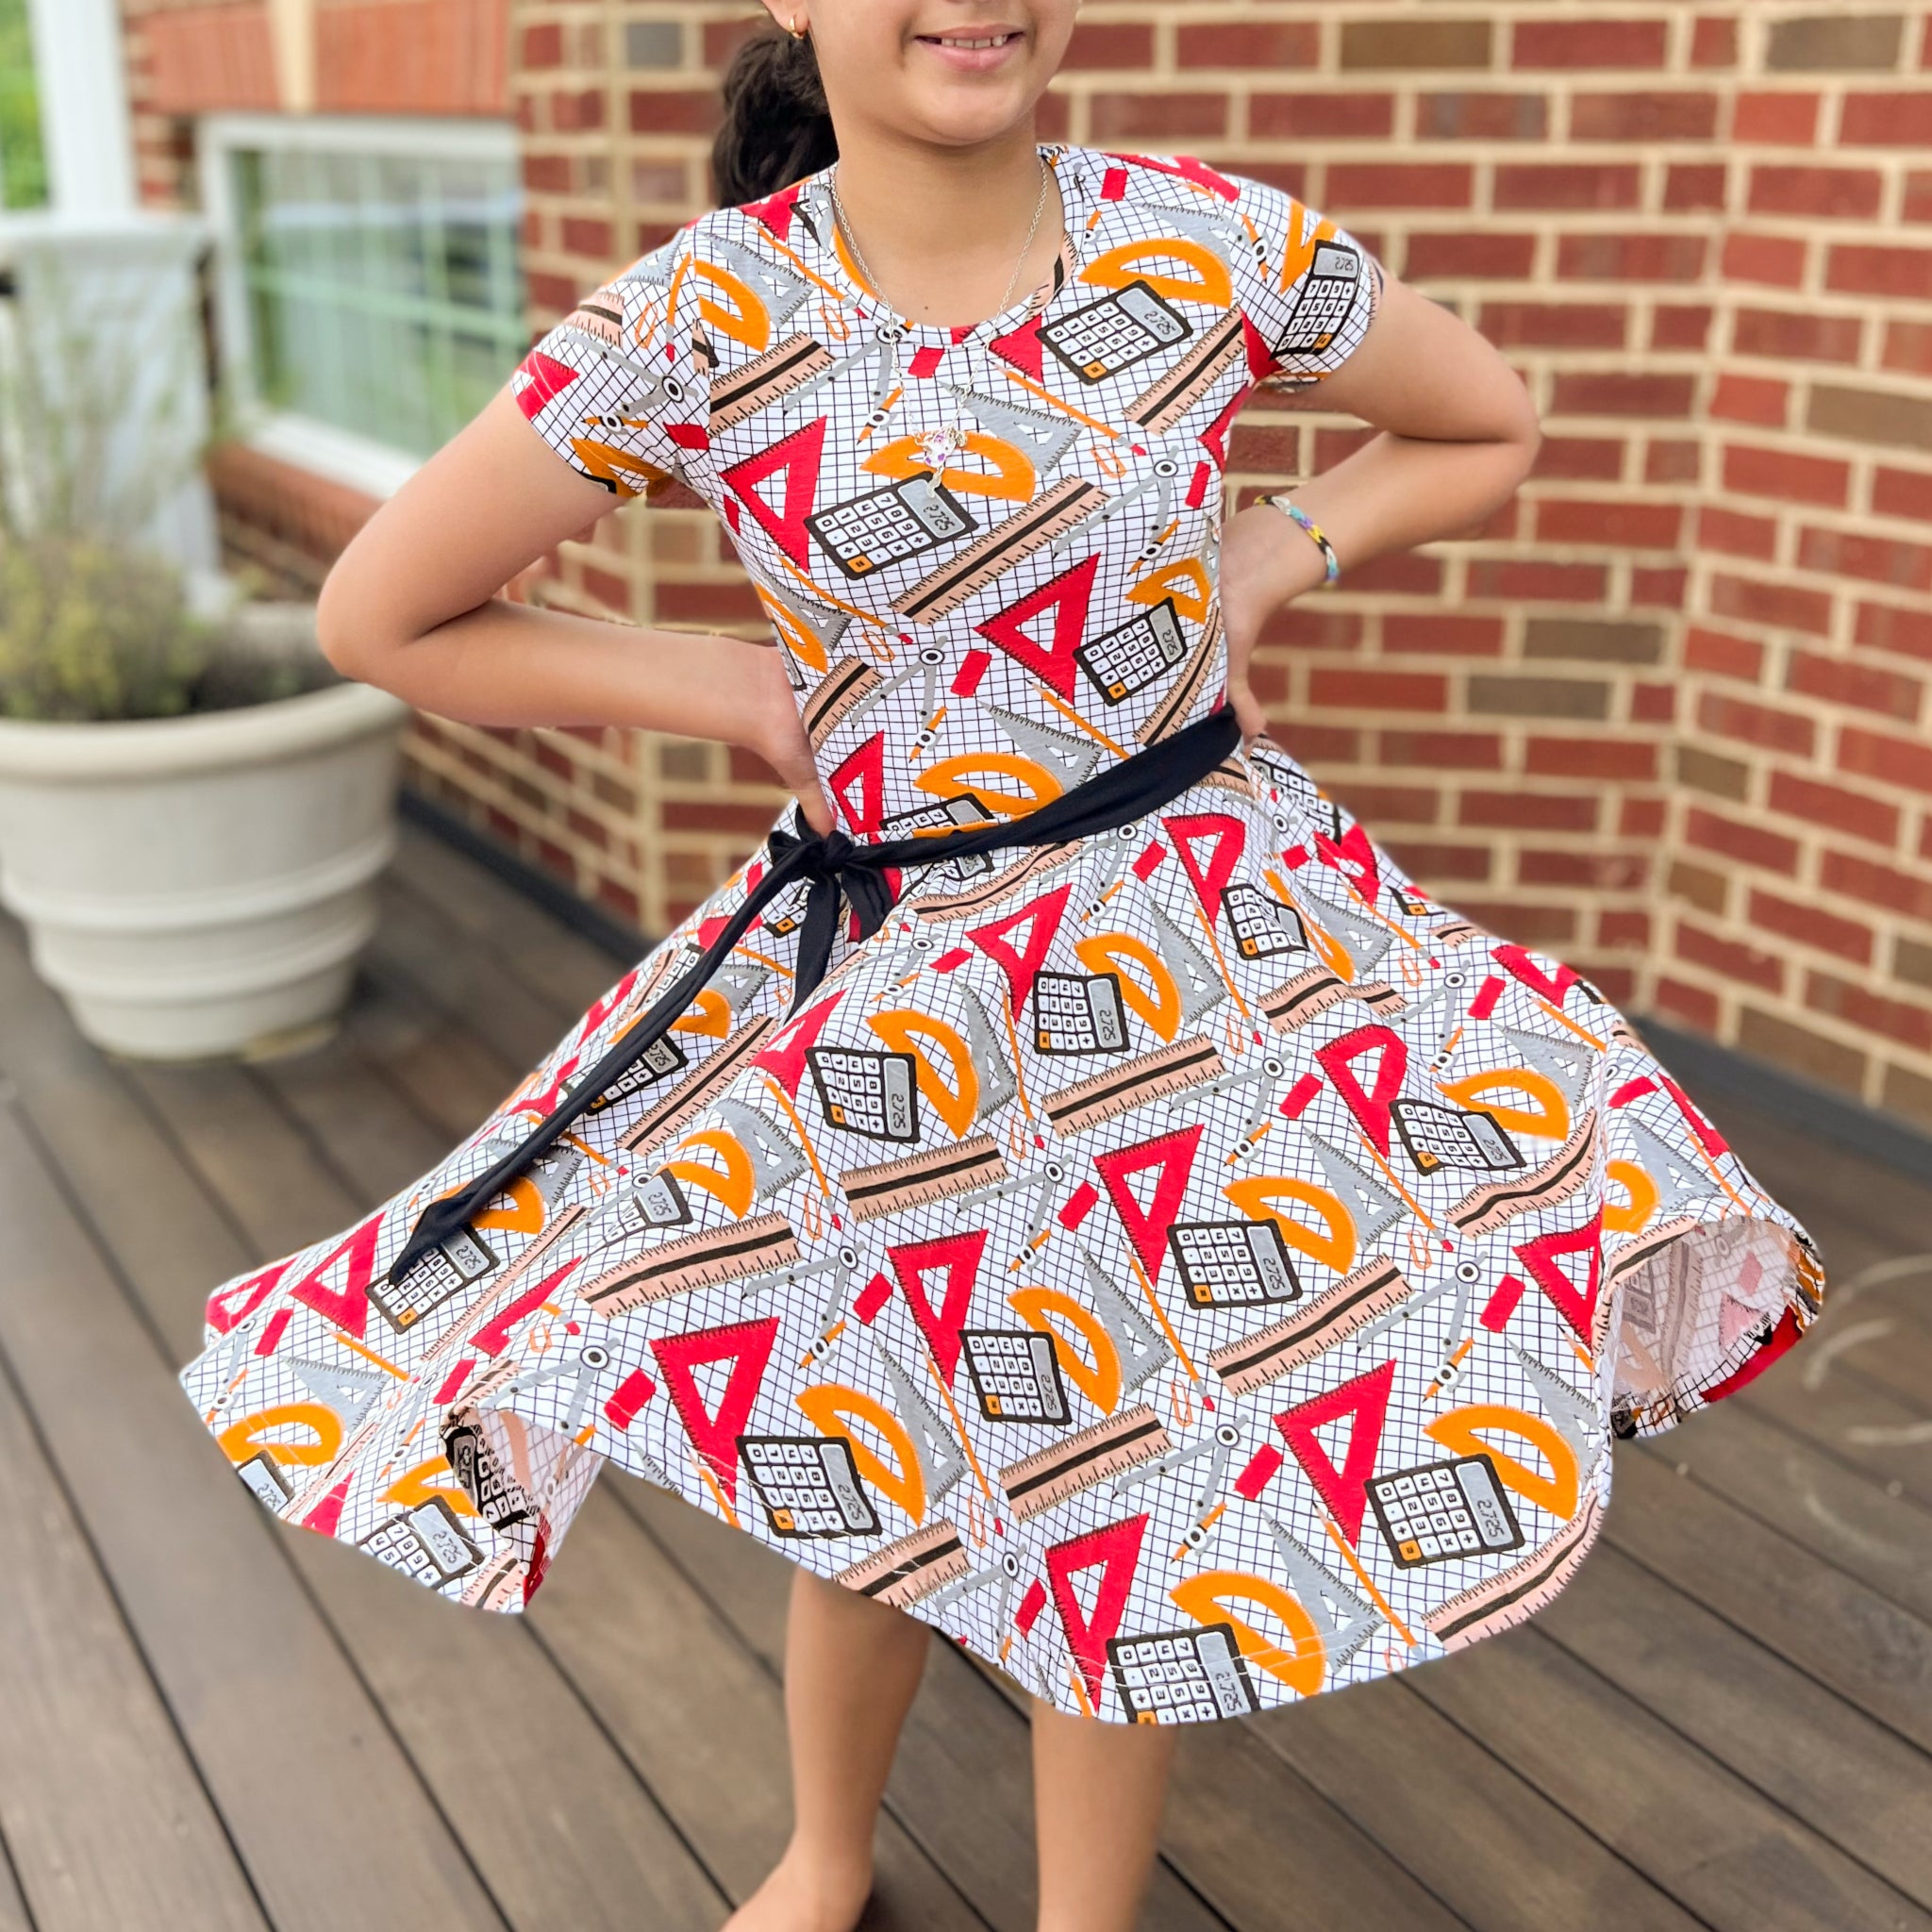 Calculated Kids Twirl Dress [FINAL SALE]